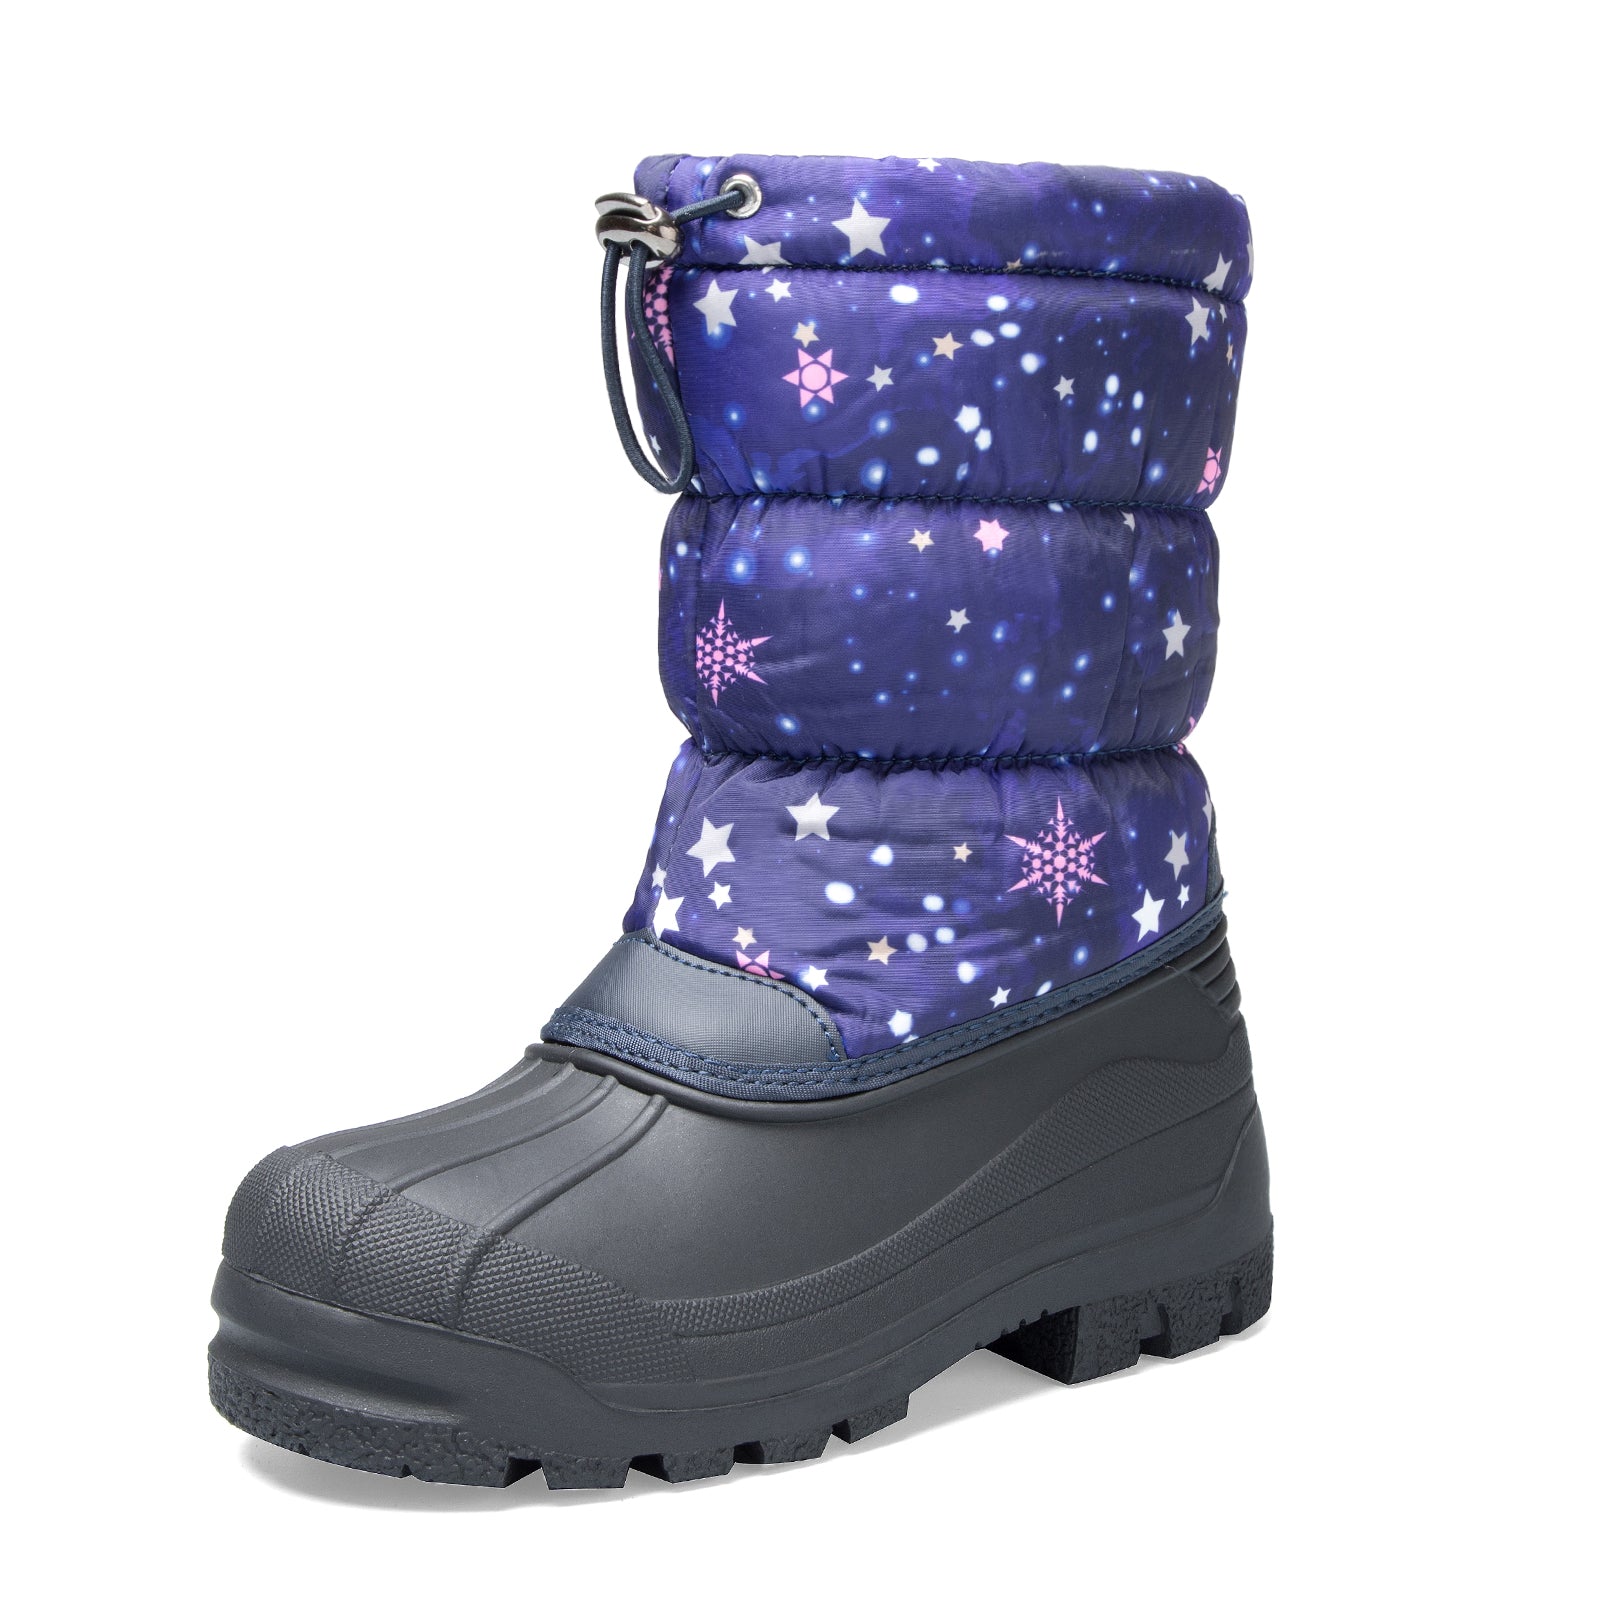 K Komforme Boys Girls Snow Boots Waterproof Winter Outdoor Boots(Toddler/Little Kid/Big Kid)